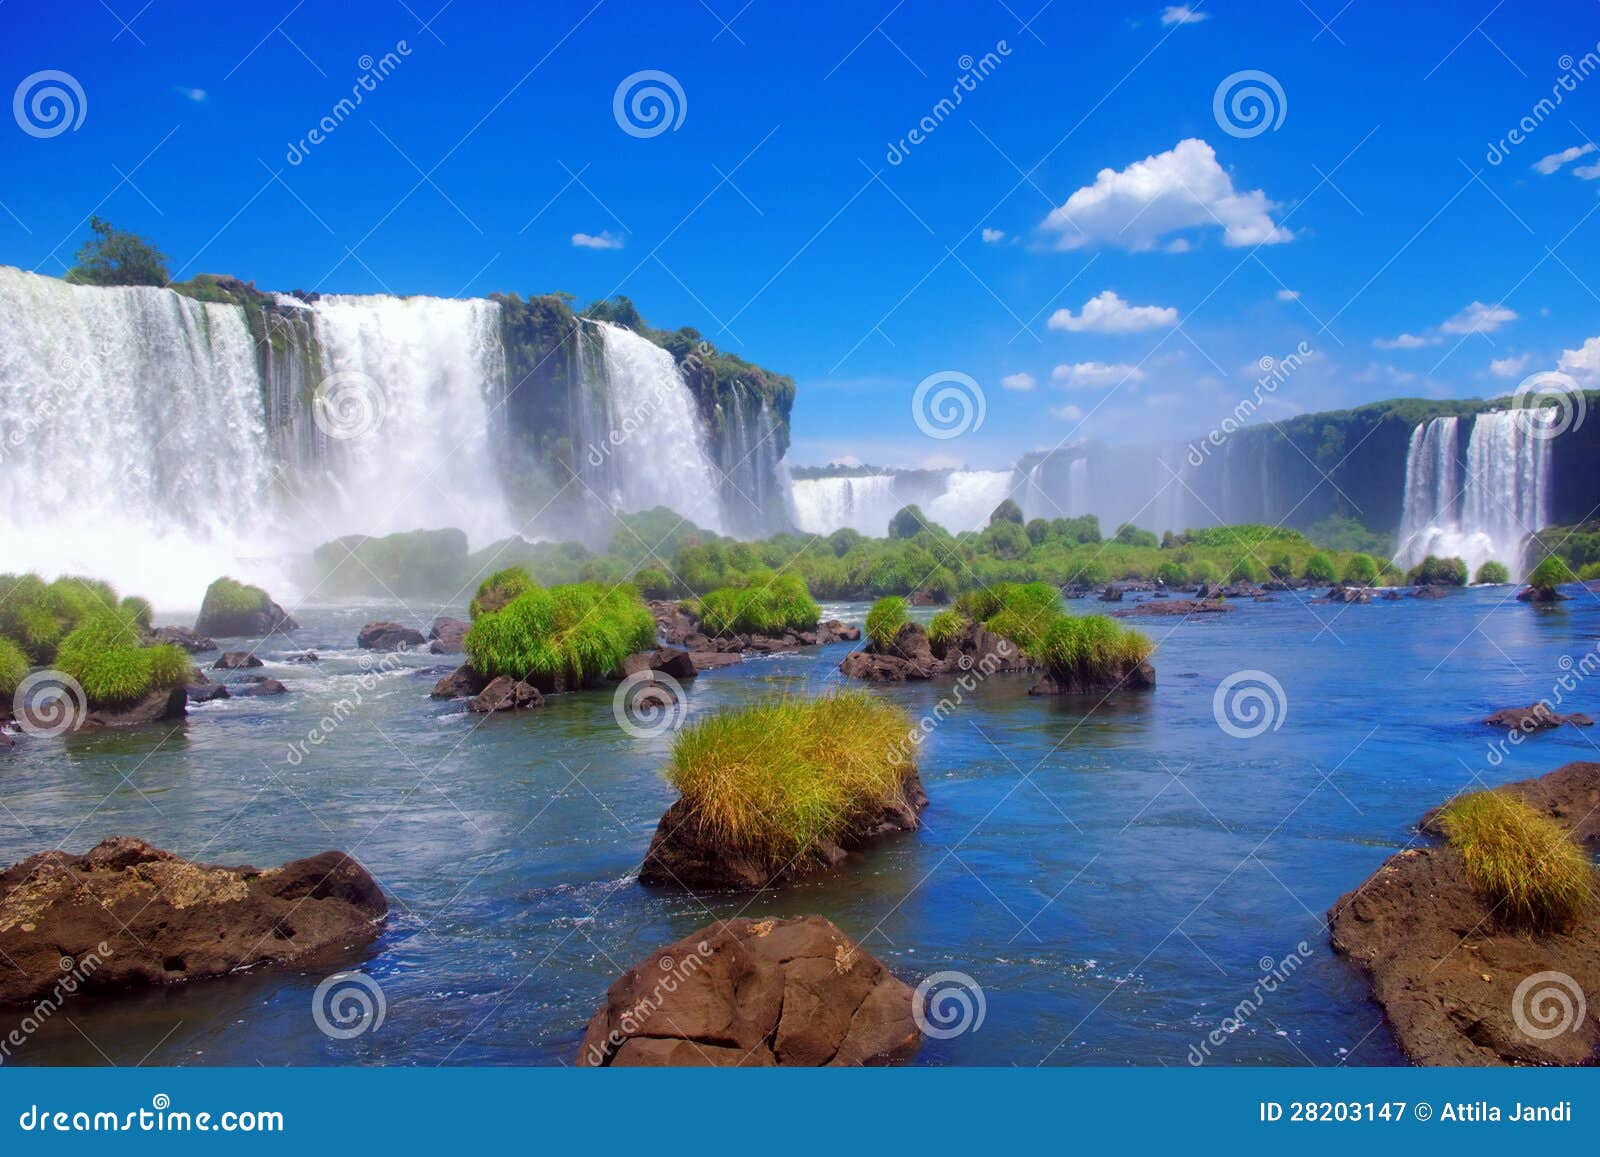 iguacu falls, brazil